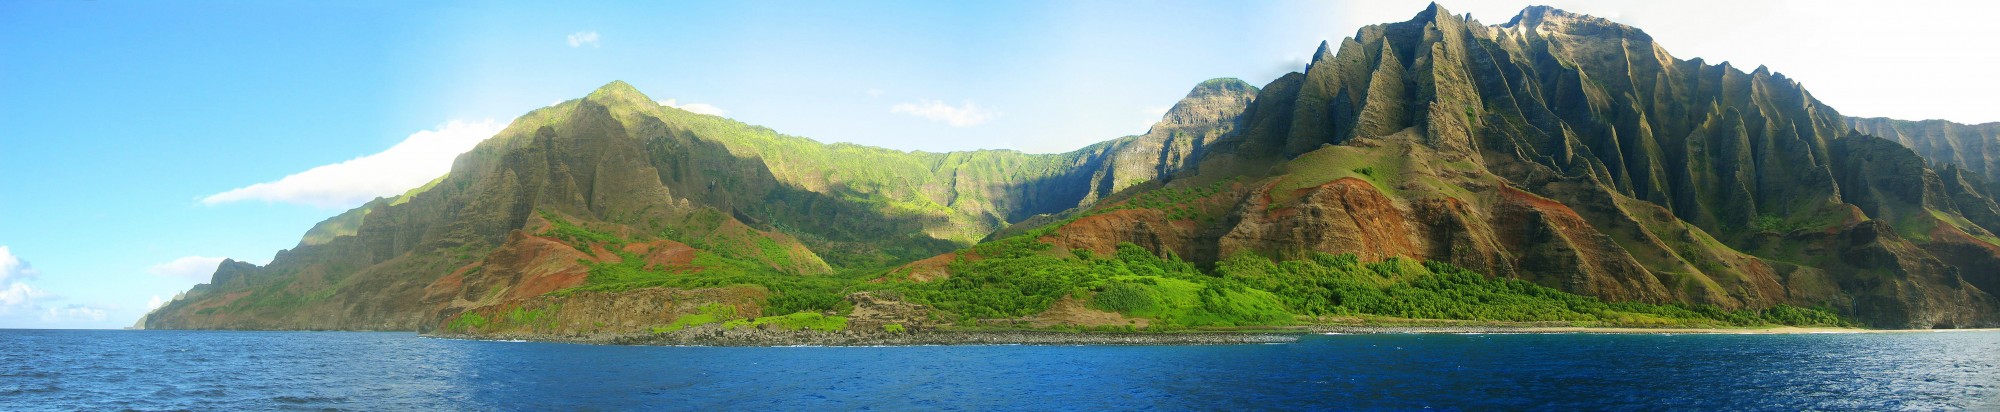 Real Kaui Panorama1